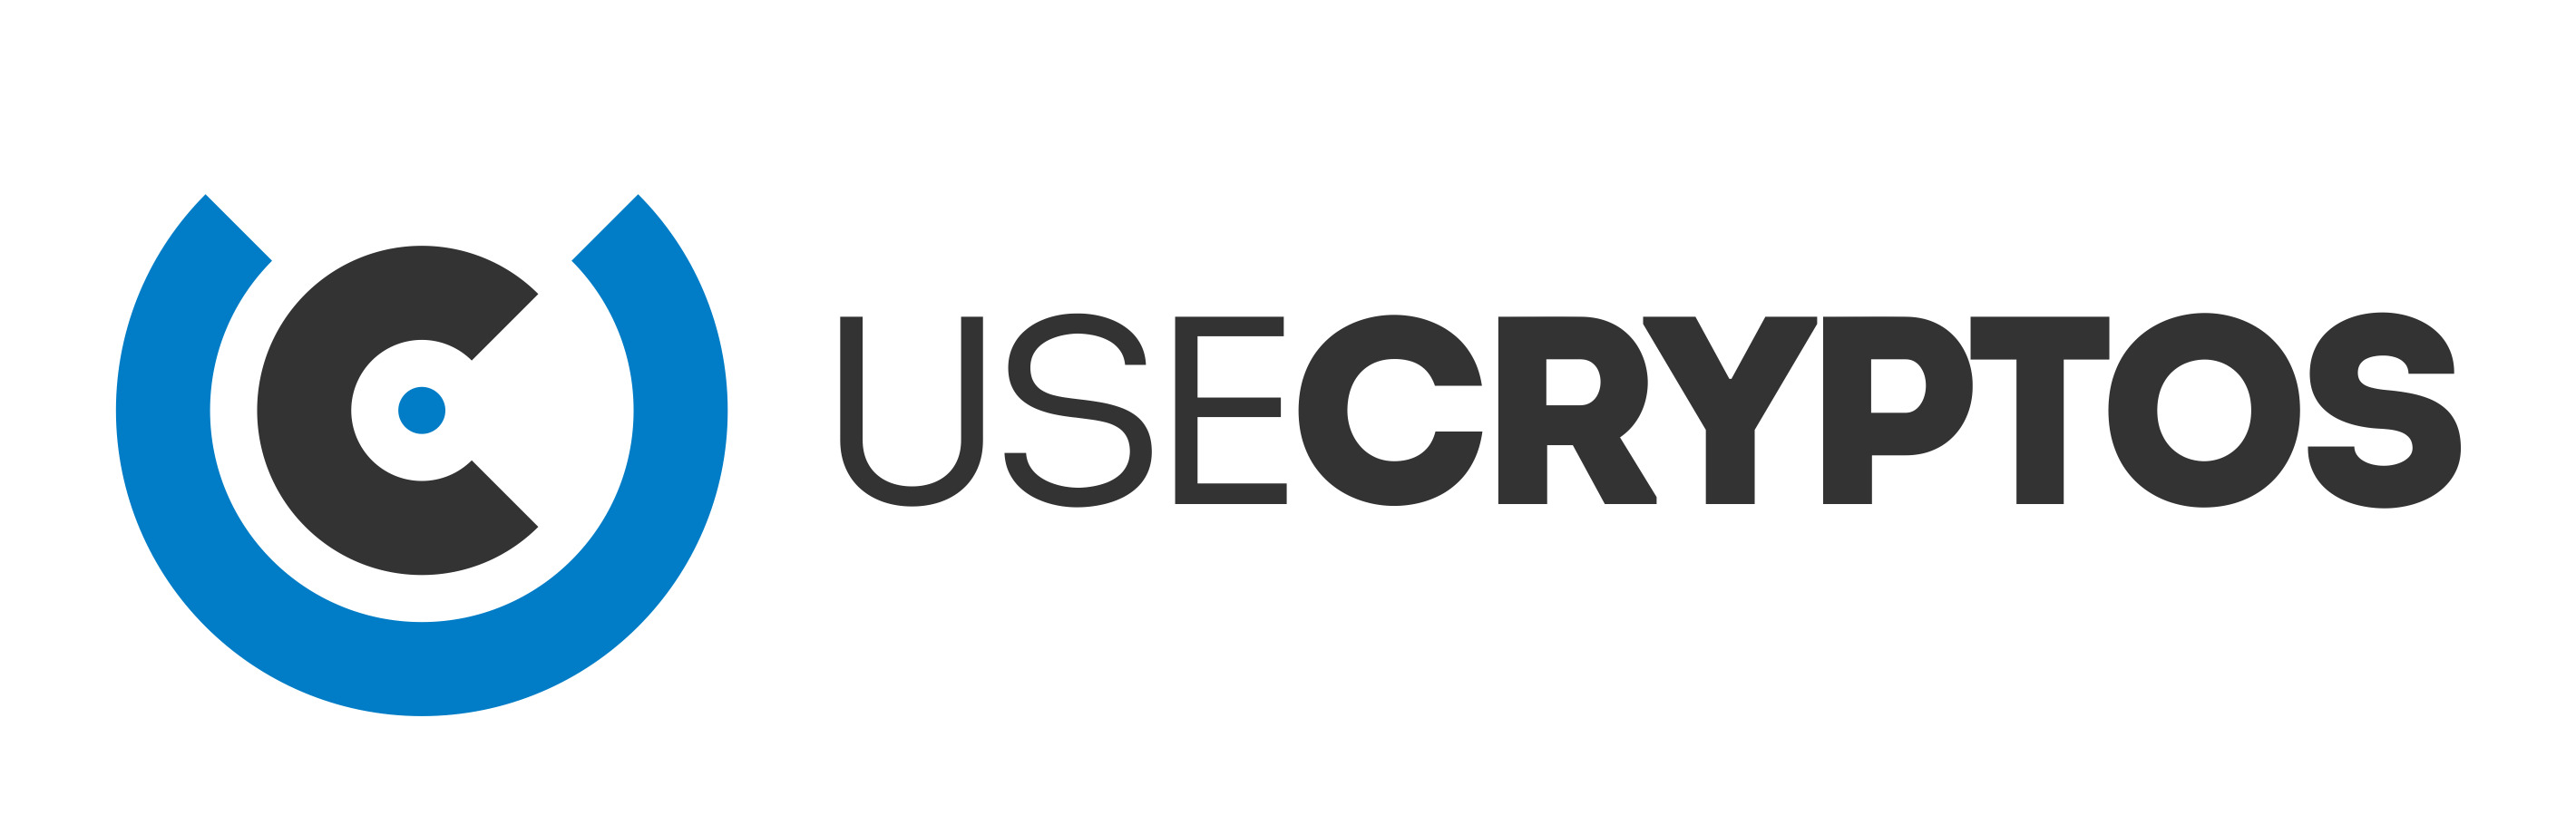 Usecryptos Logo icons